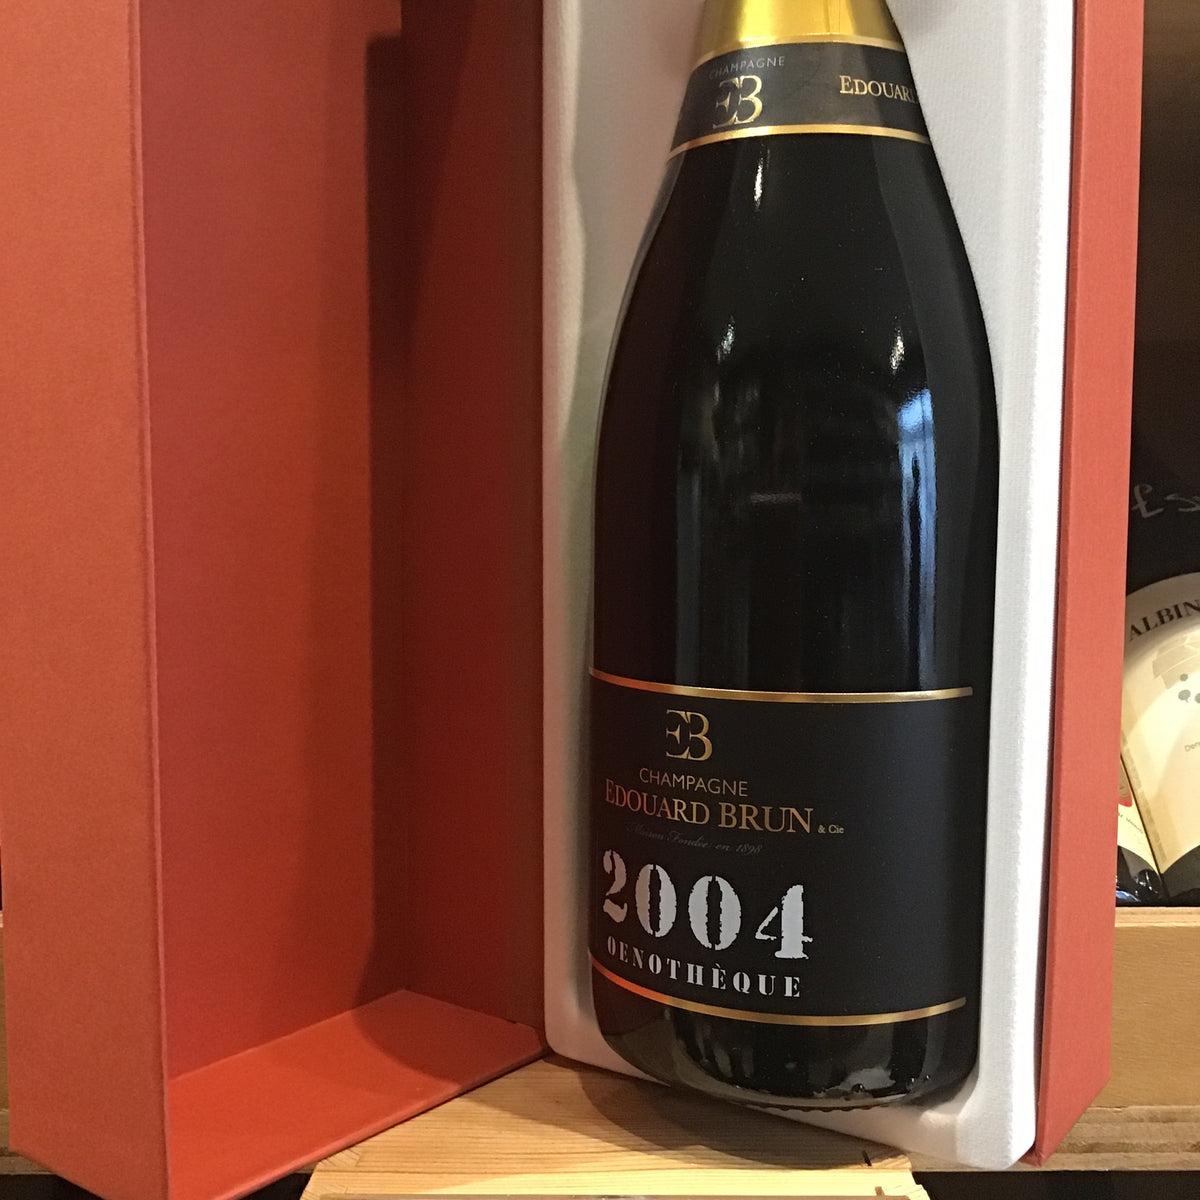 Edouard Brun Vintage Brut Champagne 2004 - Butlers Wine Cellar Brighton